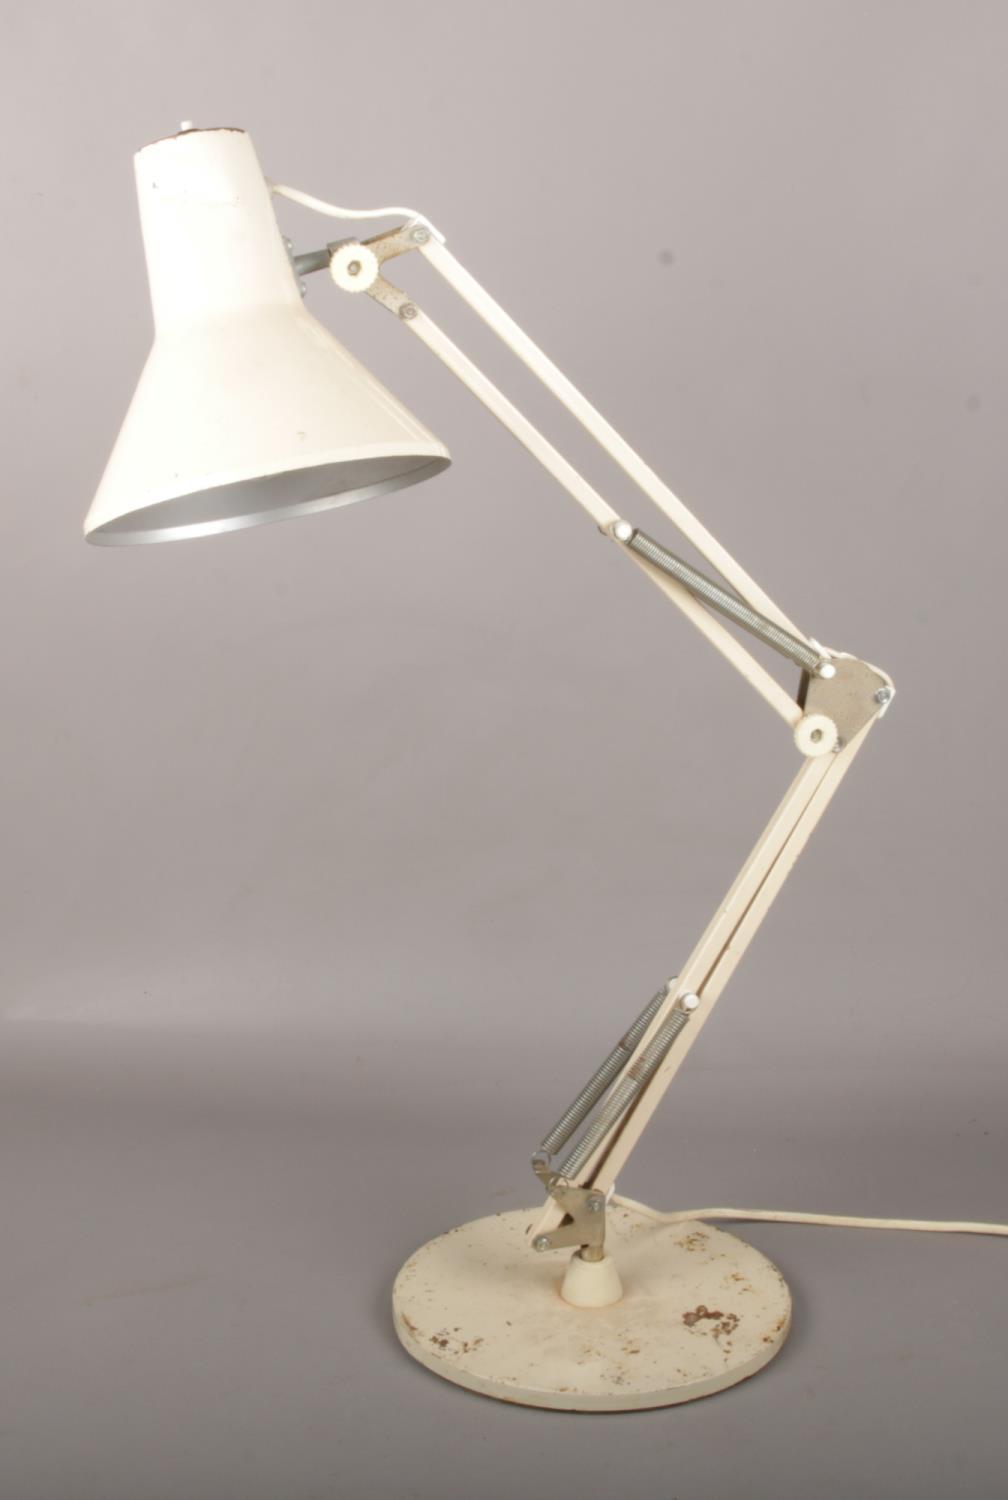 A vintage cream anglepoise desk lamp.